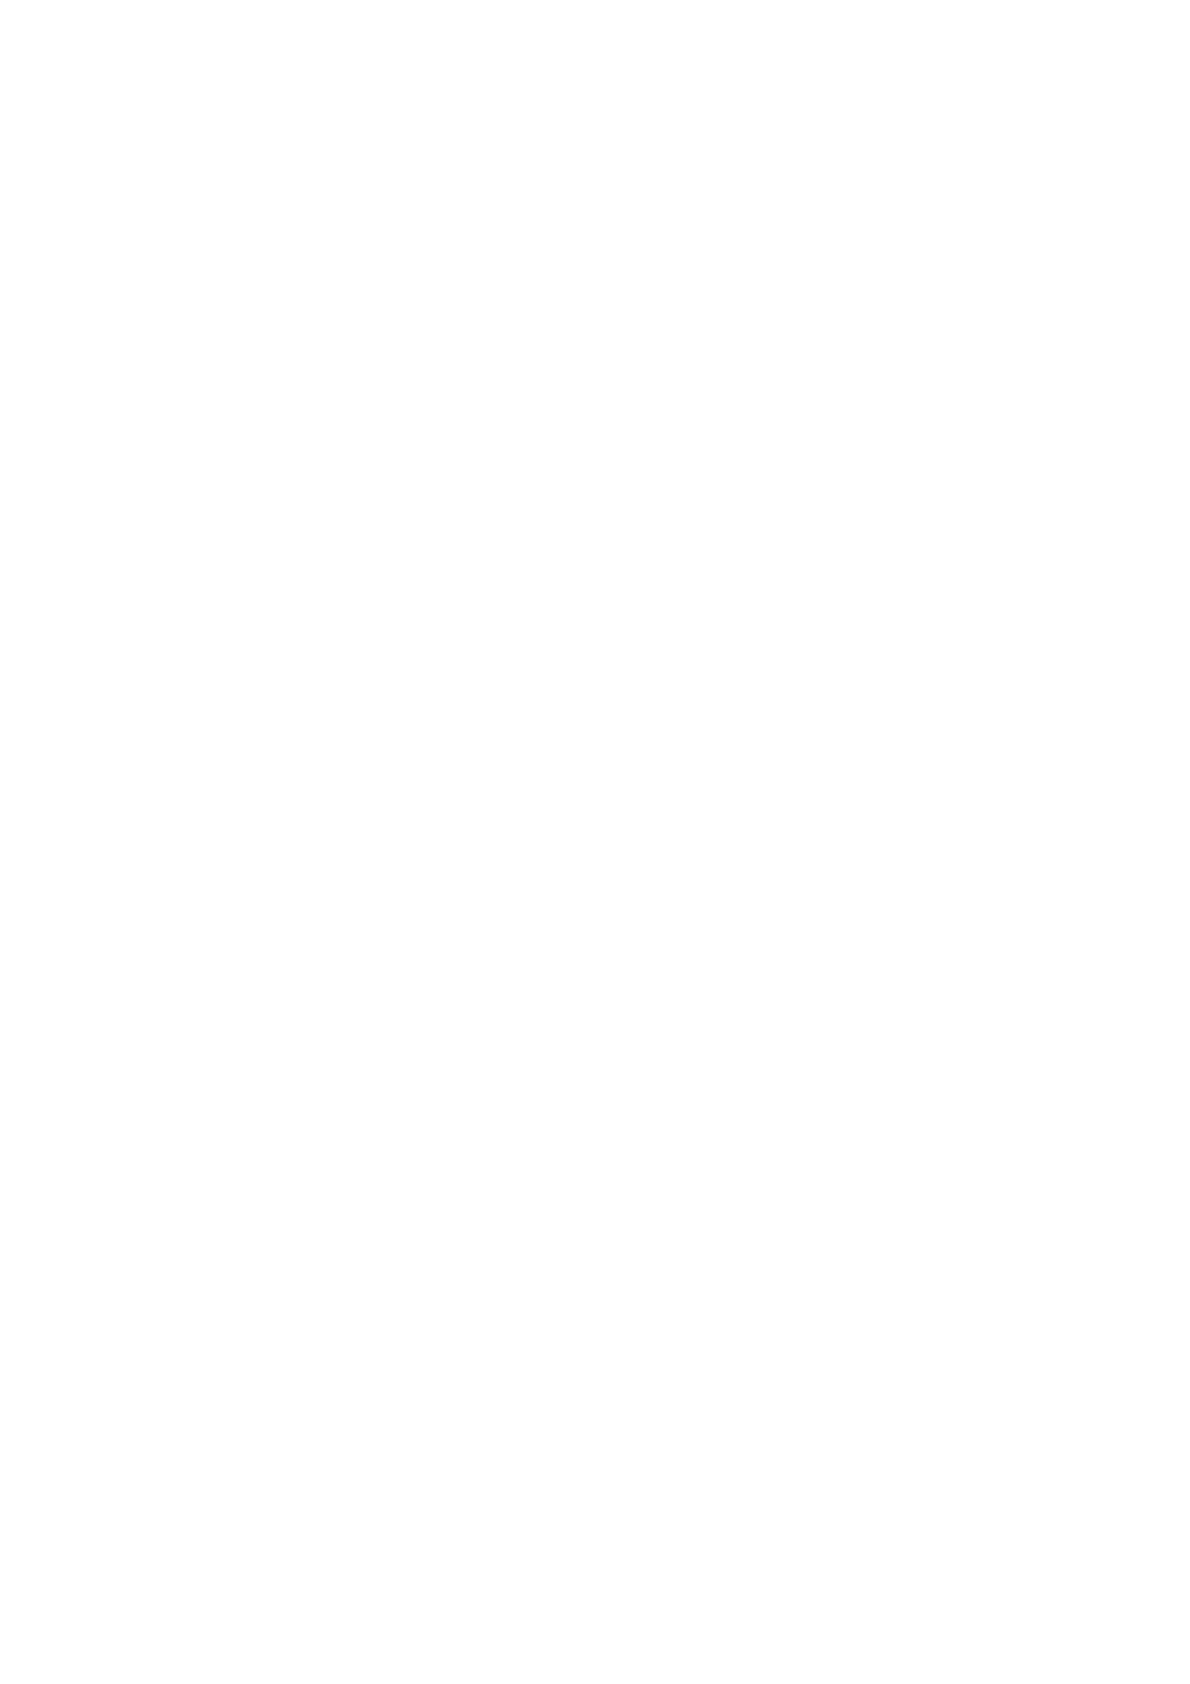 Hawks Nest Logo - HAWK'S NEST